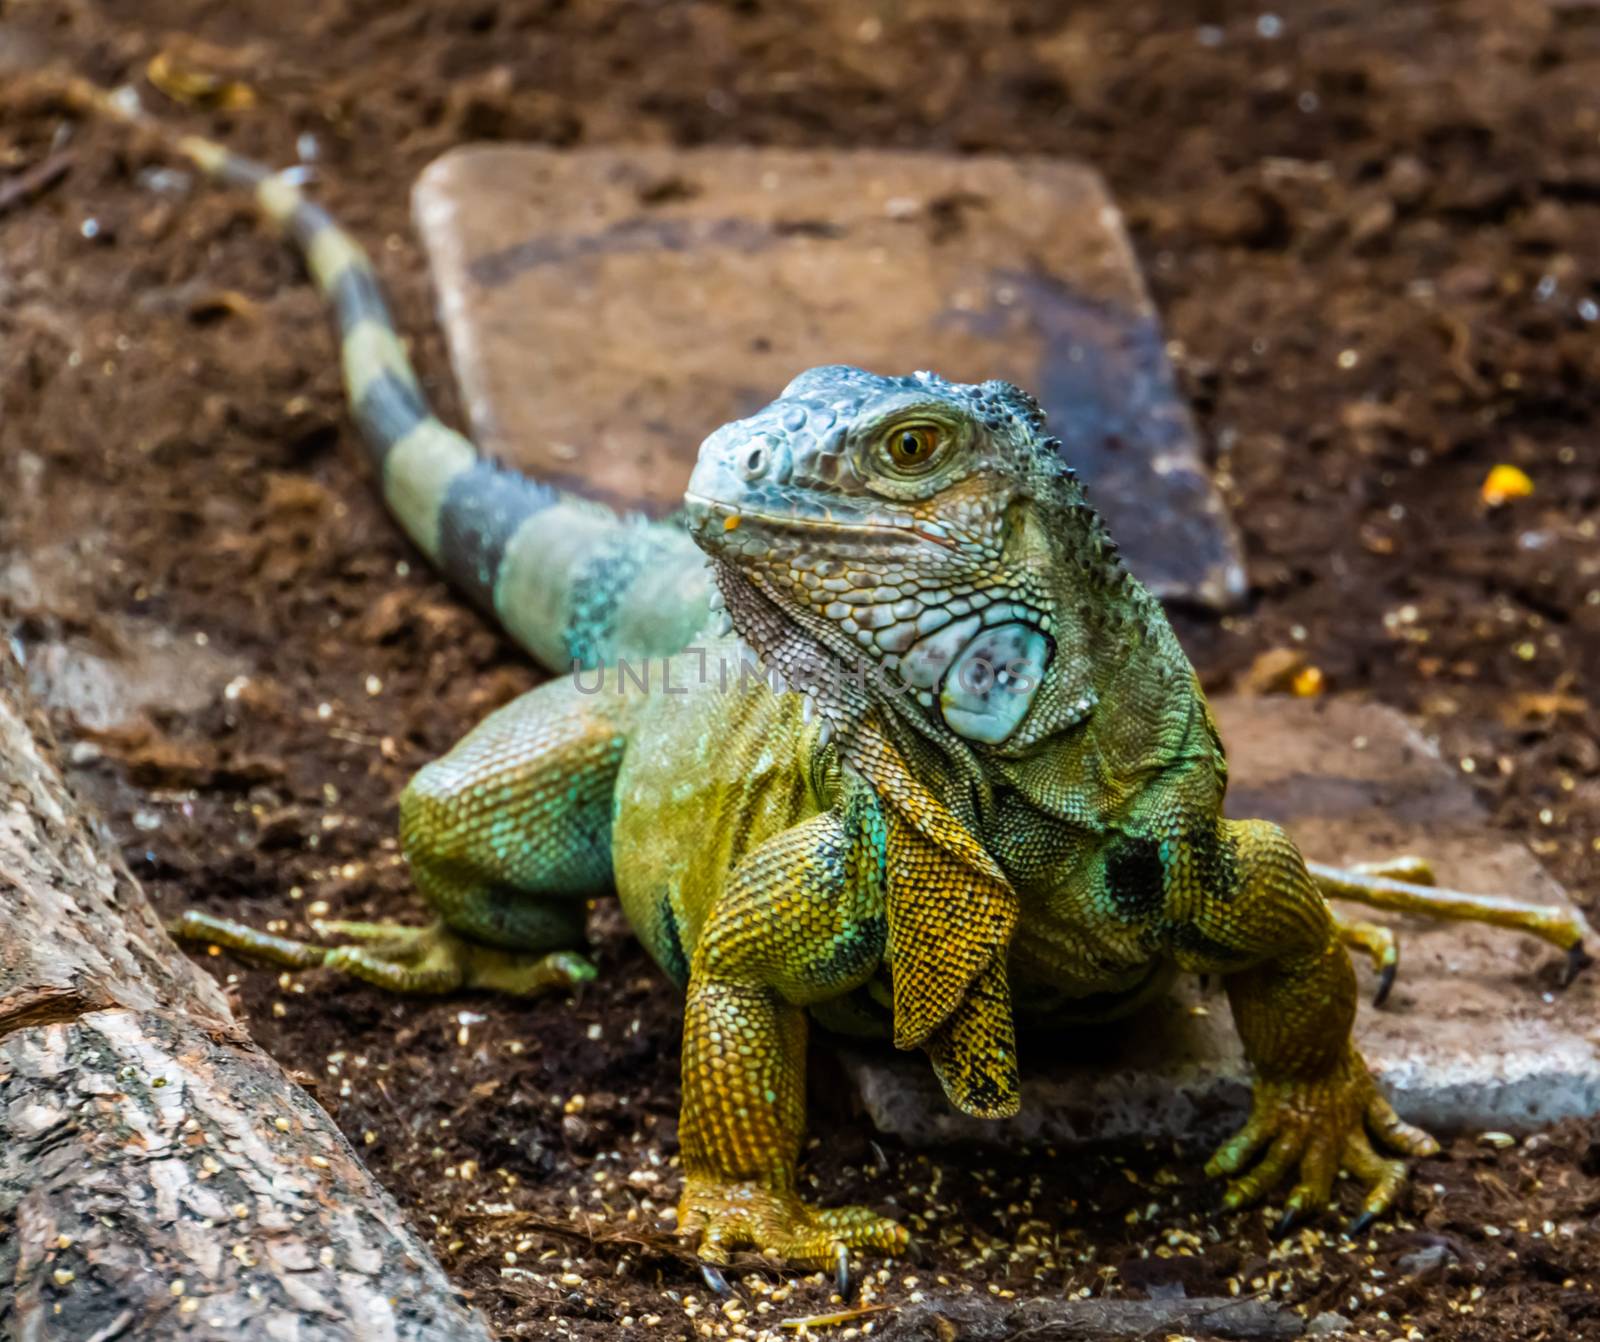 beautiful closeup portrait of a green american iguana, popular tropical lizard from America by charlottebleijenberg